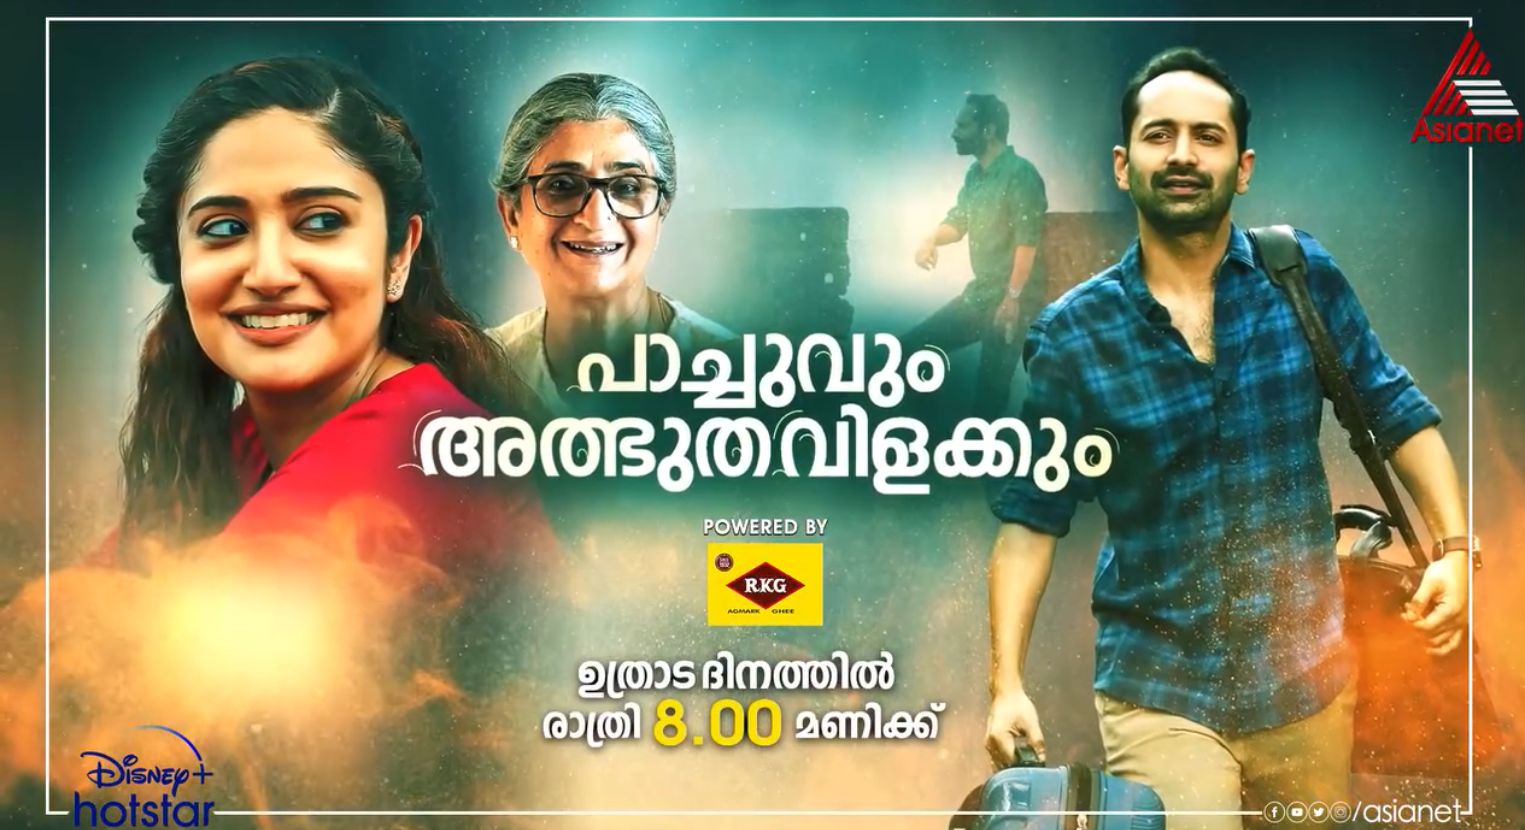 Safari TV - New Malayalam Travel Channel Coming Soon 1